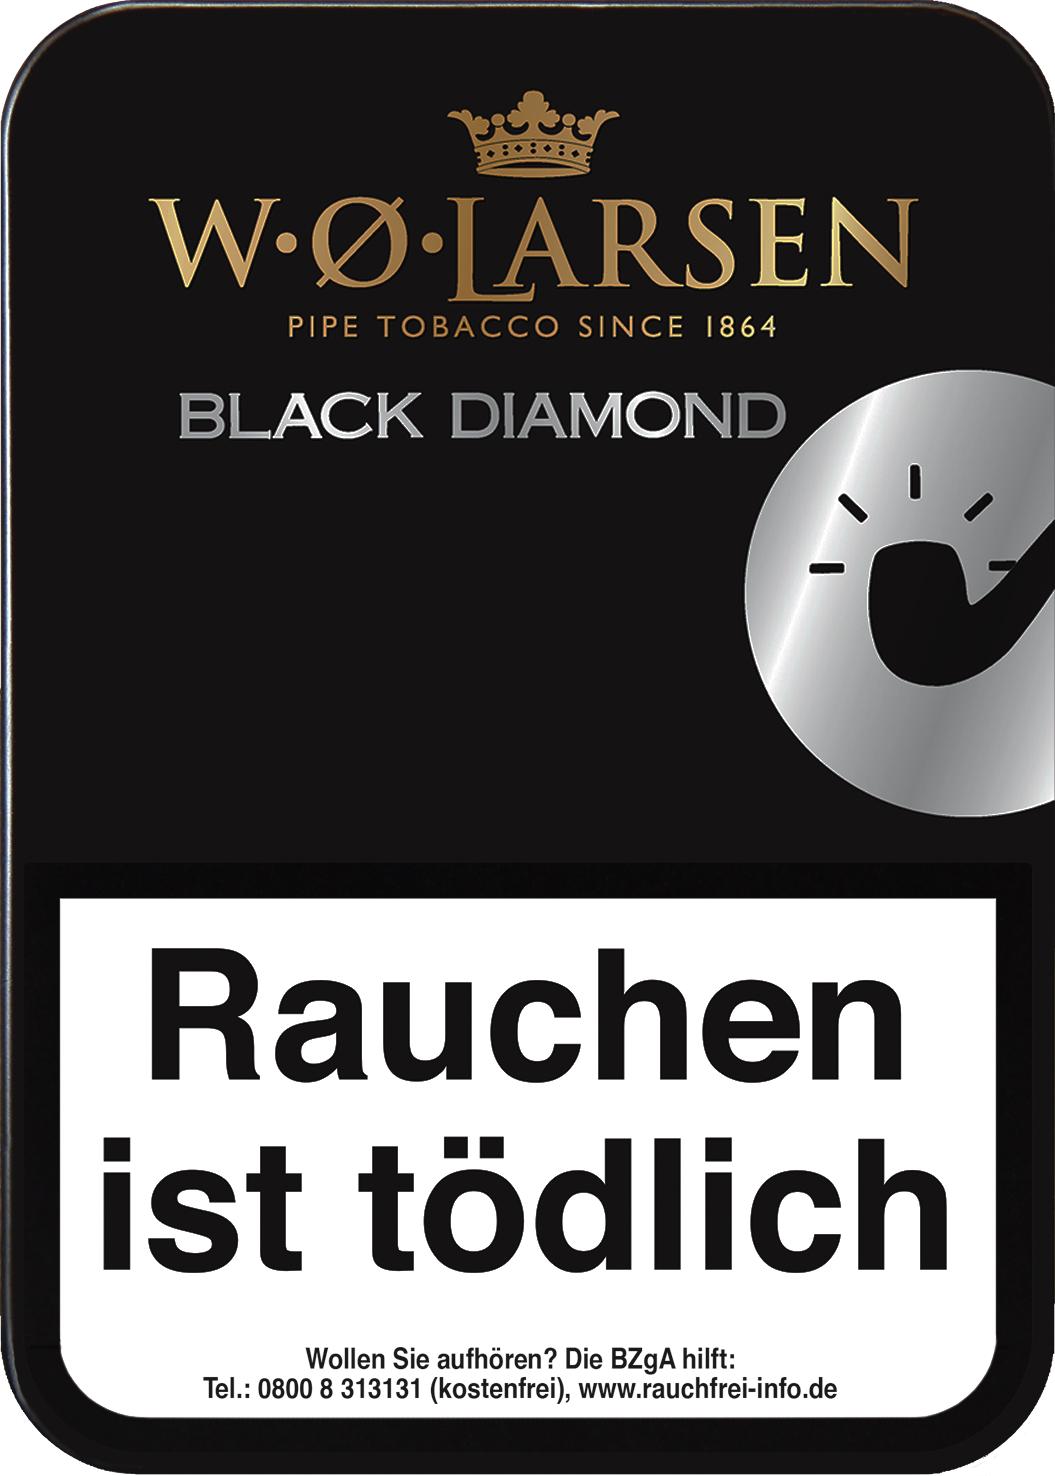 W.O. Larsen Black  Diamond 1 x 100g Pfeifentabak 100g